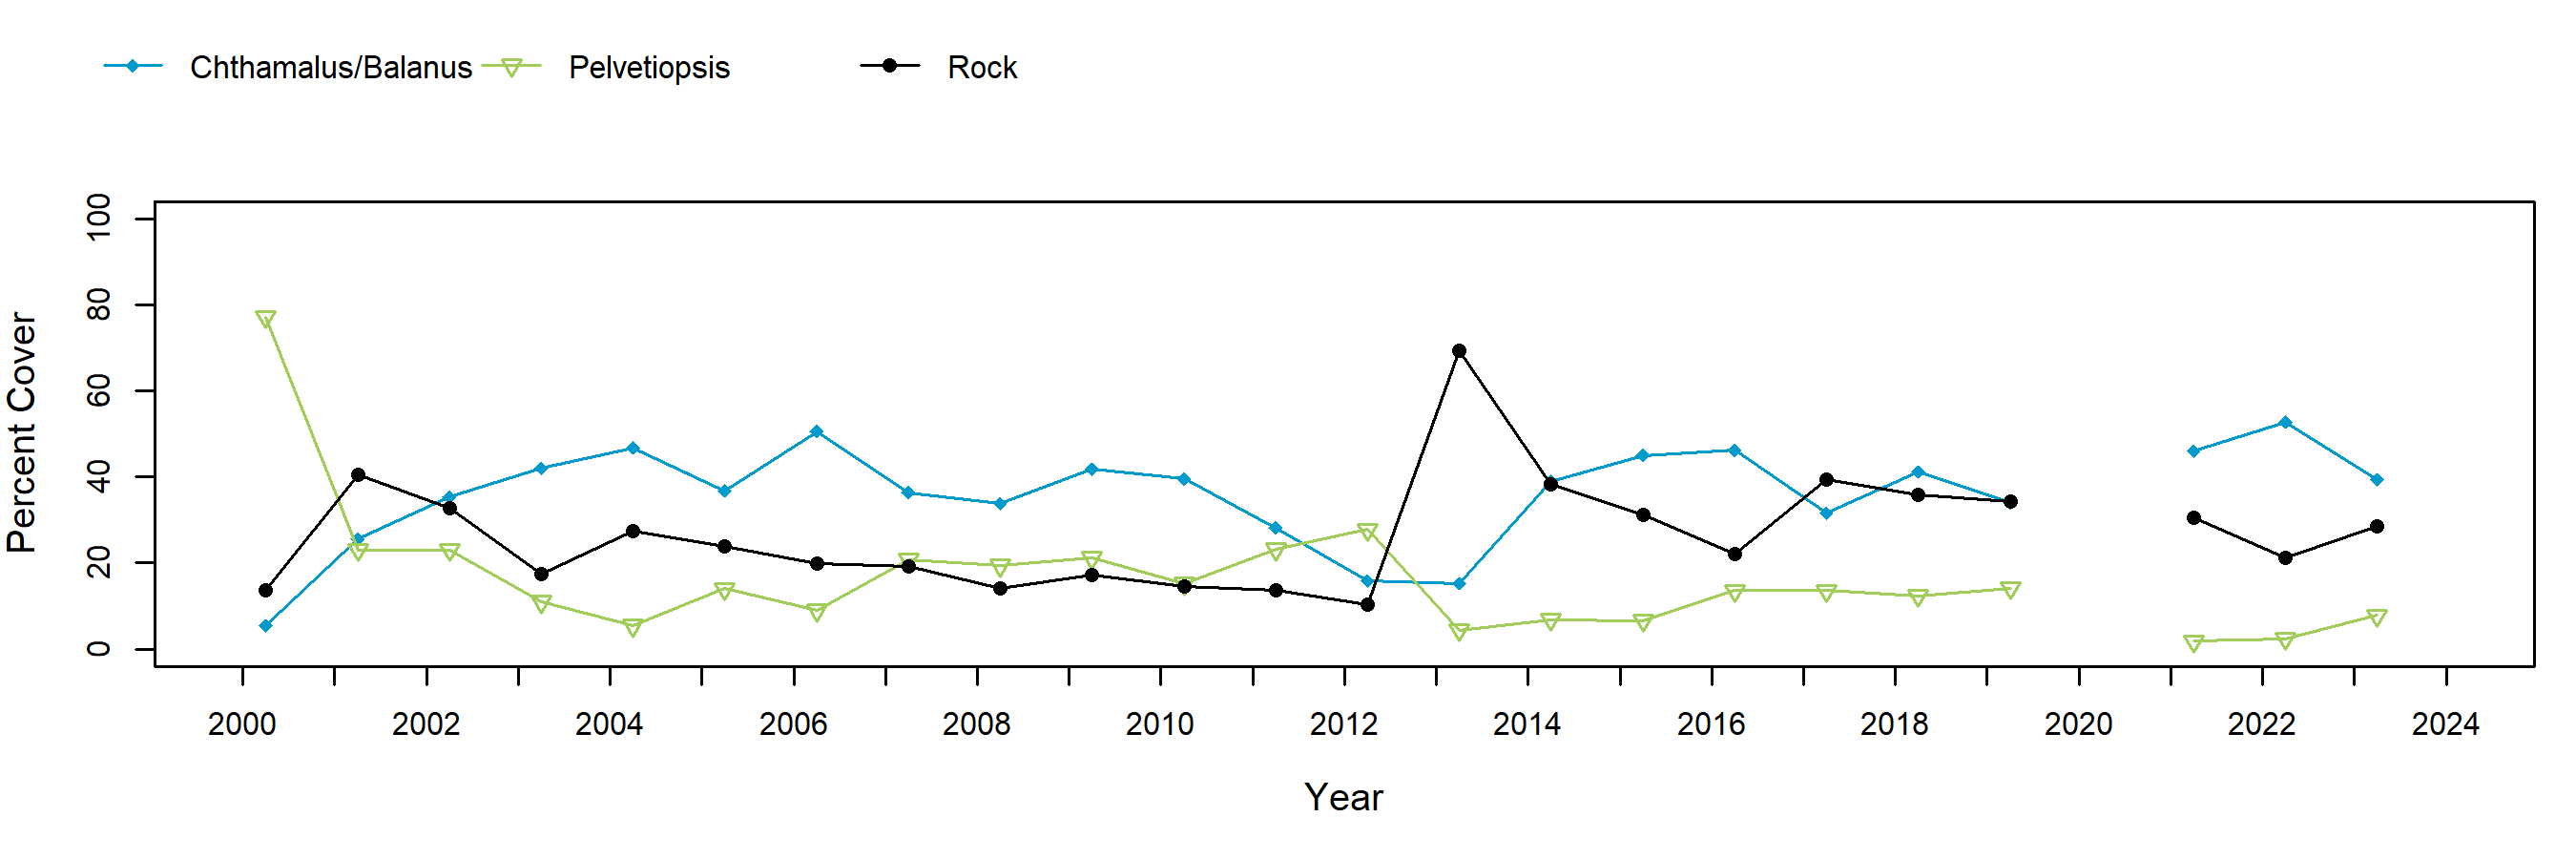 Fogarty Creek Pelvetiopsis trend plot